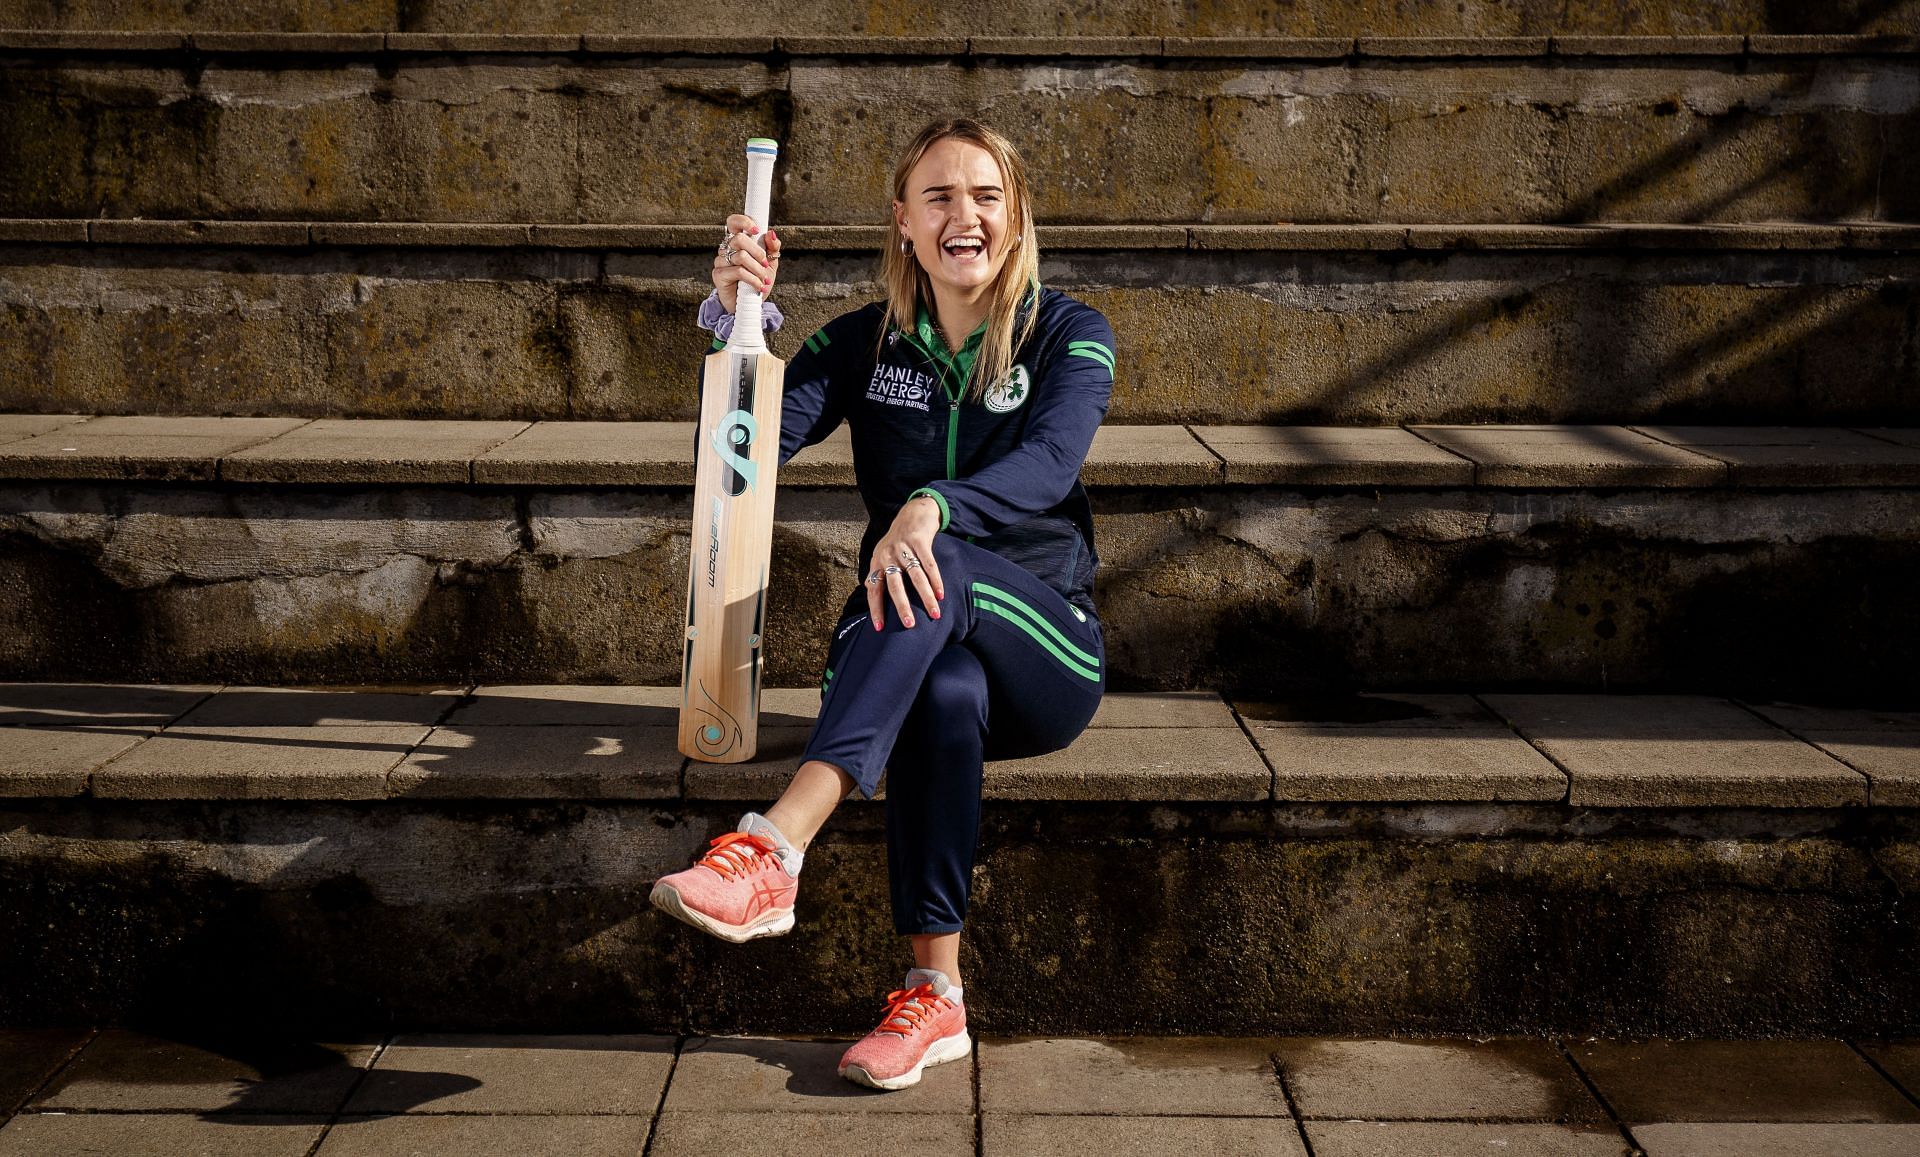 Ireland Women Cricket Team Photocall